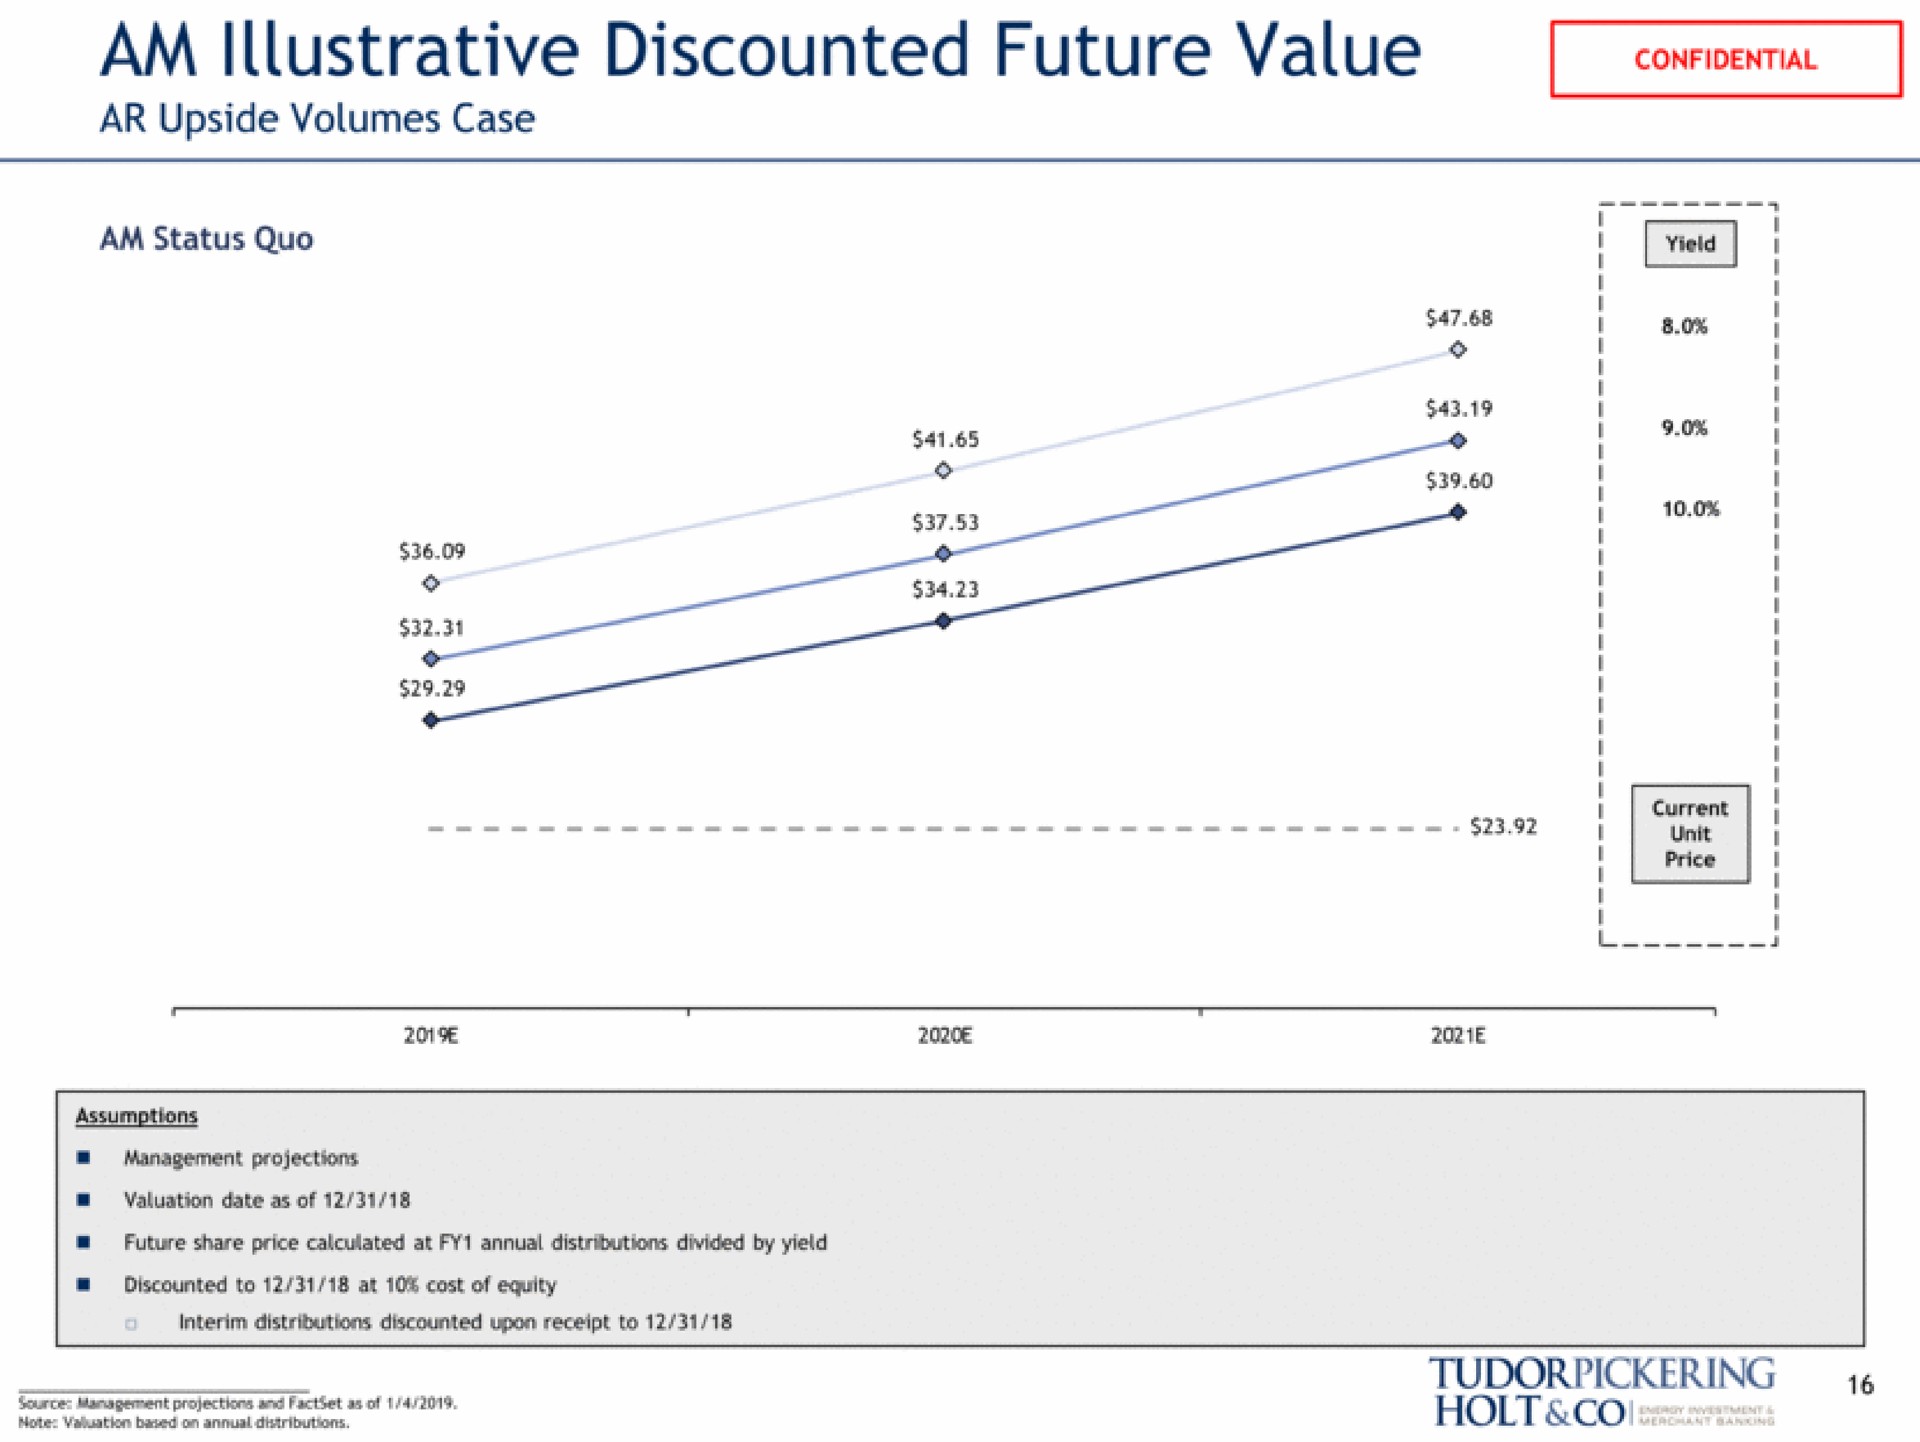 am illustrative discounted future value upside volumes case i note holt | Tudor, Pickering, Holt & Co